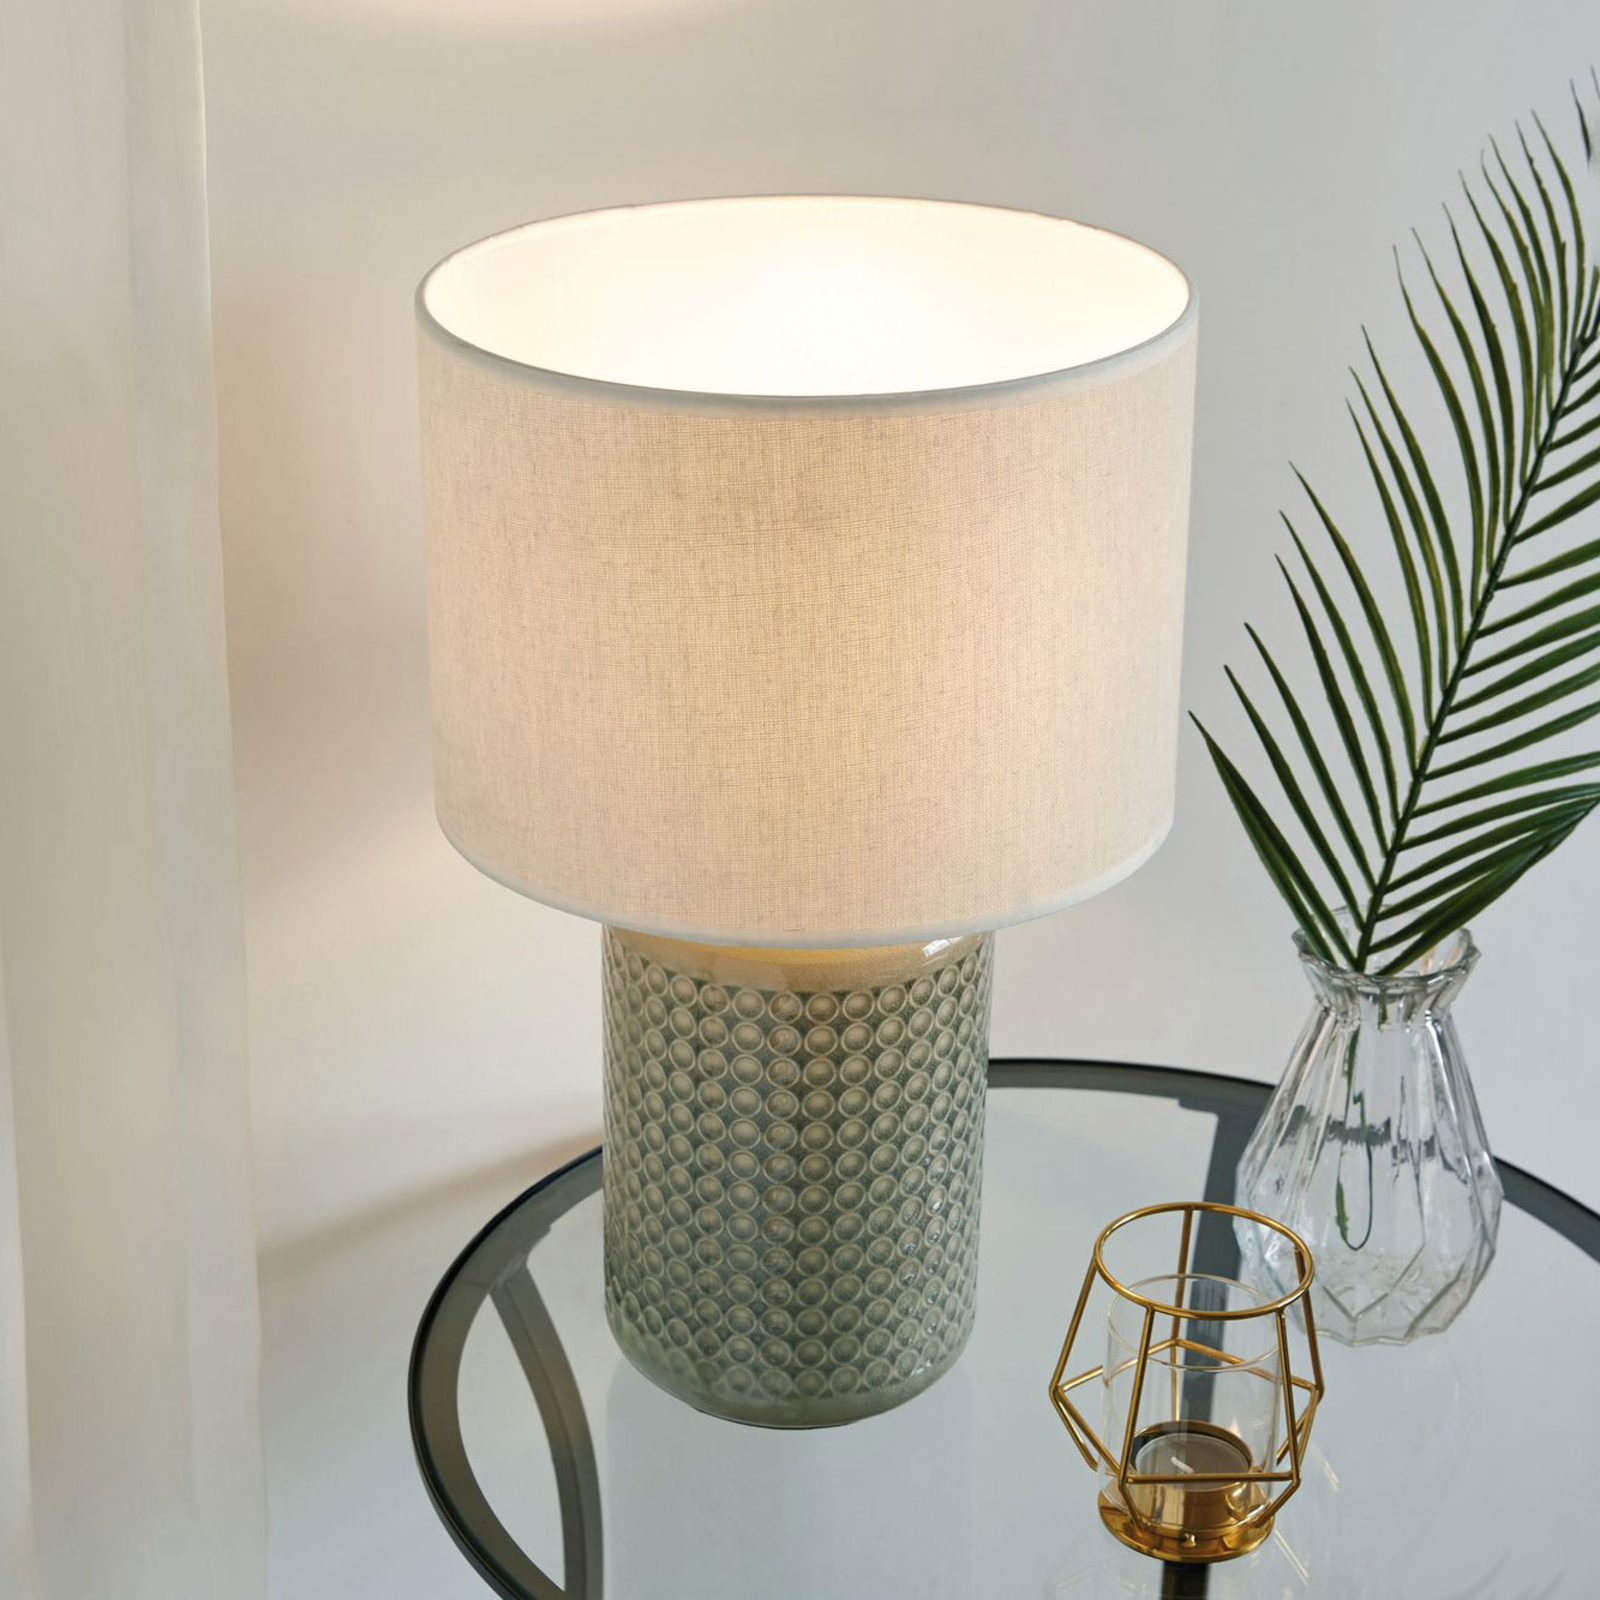 Pauleen Go for Glow table lamp, ceramic base